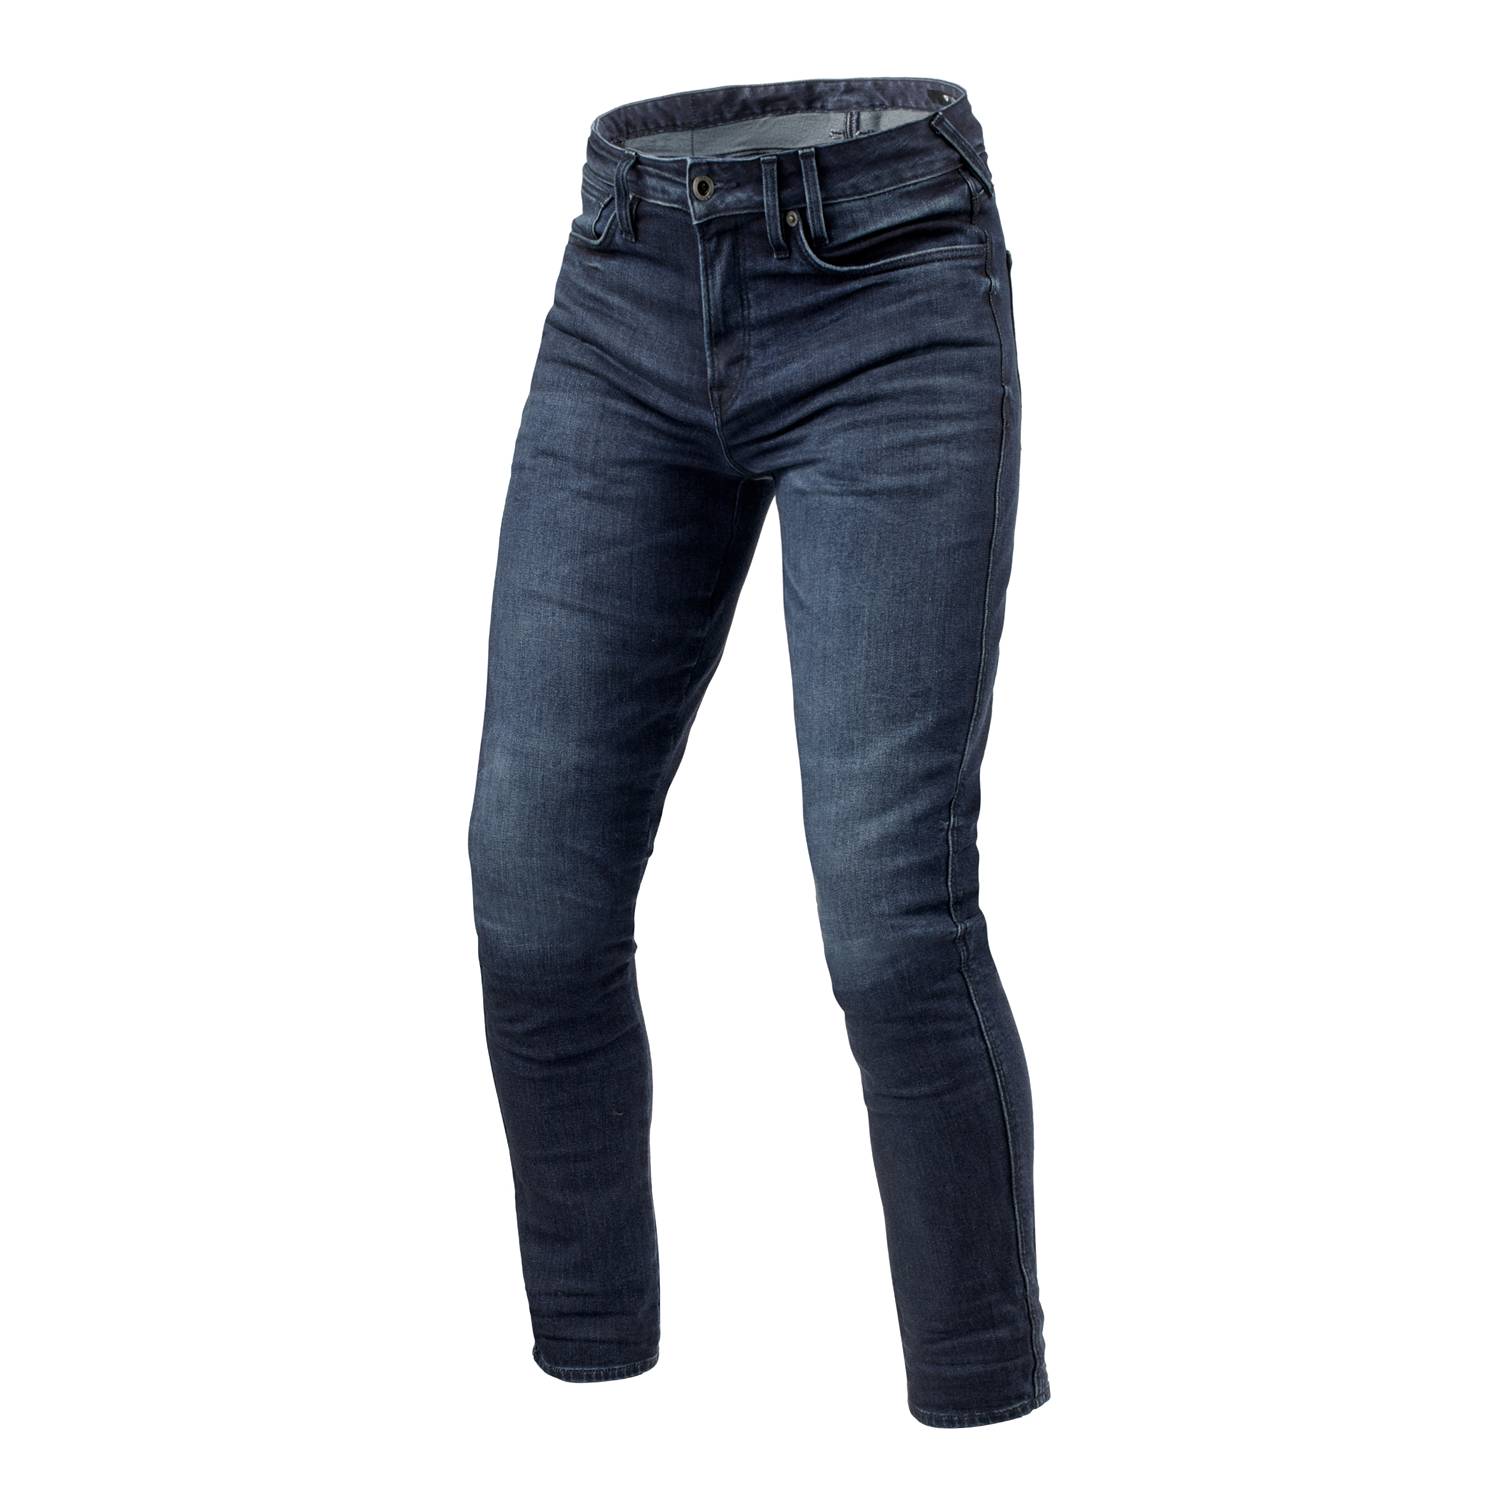 Image of REV'IT! Jeans Carlin SK Dark Blue Used L32 Motorcycle Jeans Größe L32/W32